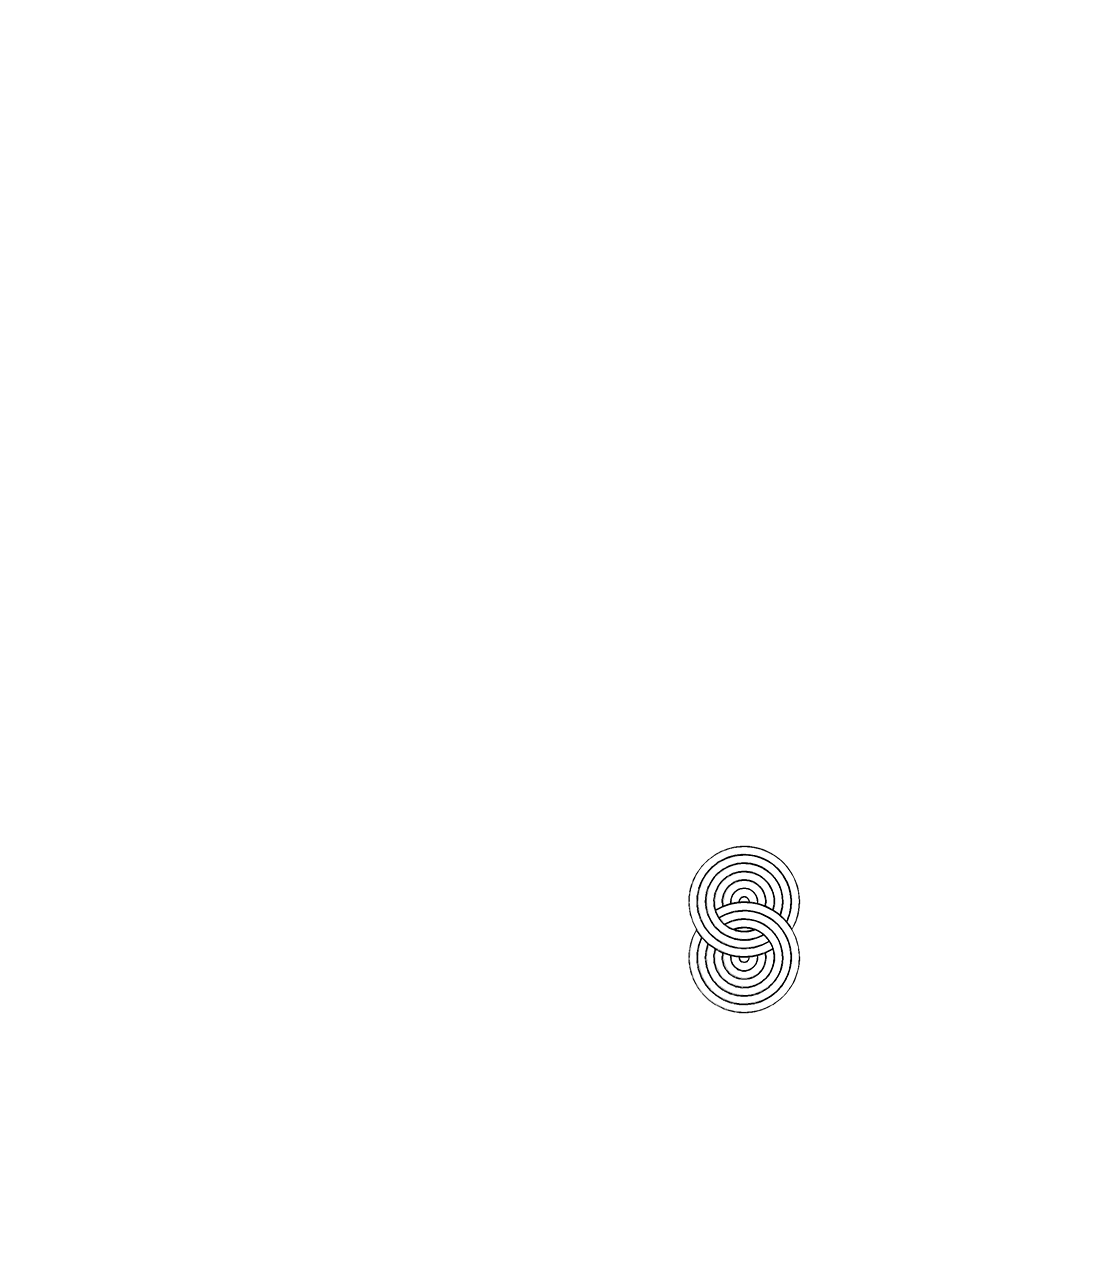 URBAN HOUSE